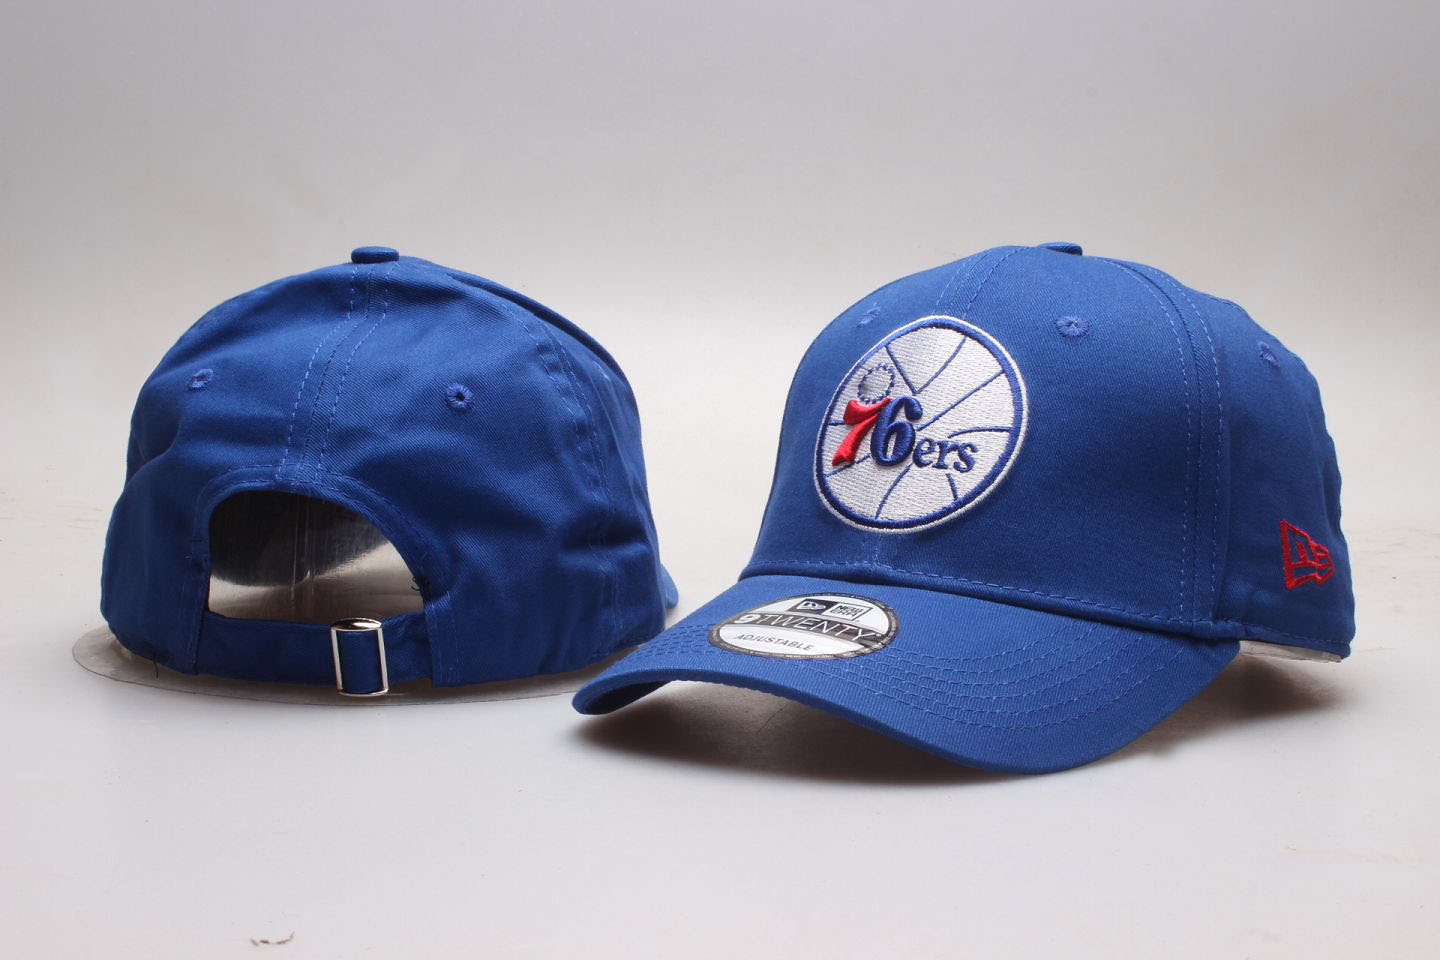 76ers Team Logo Blue Peaked Adjustable Hat YP